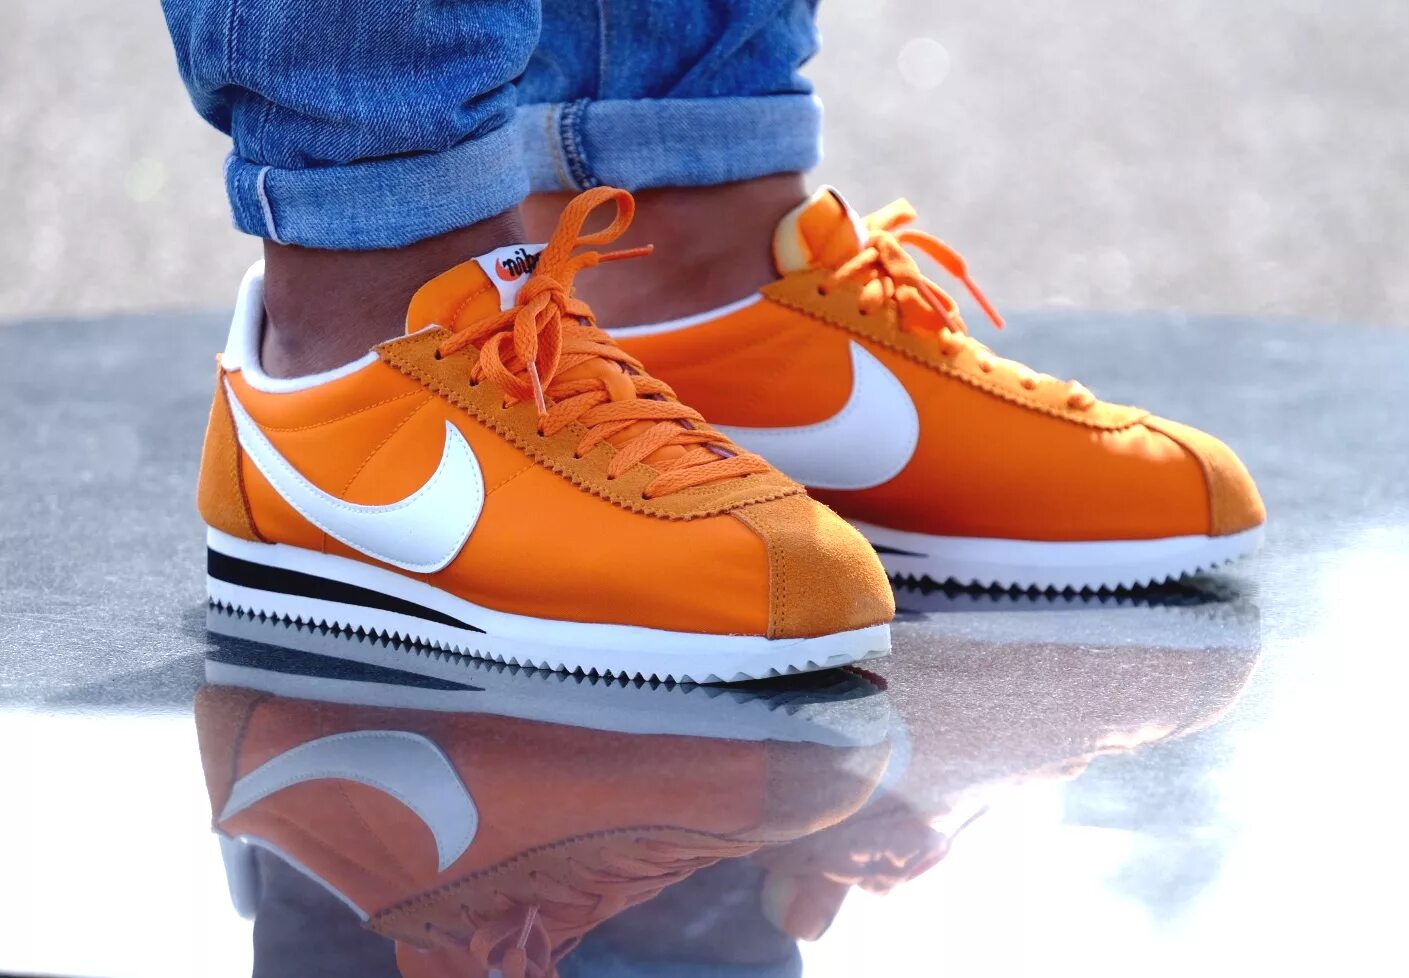 Nike Cortez Orange. Найк Cortez оранжевые. Nike Cortez оранжевые. Nike Cortez nylon оранжевые.